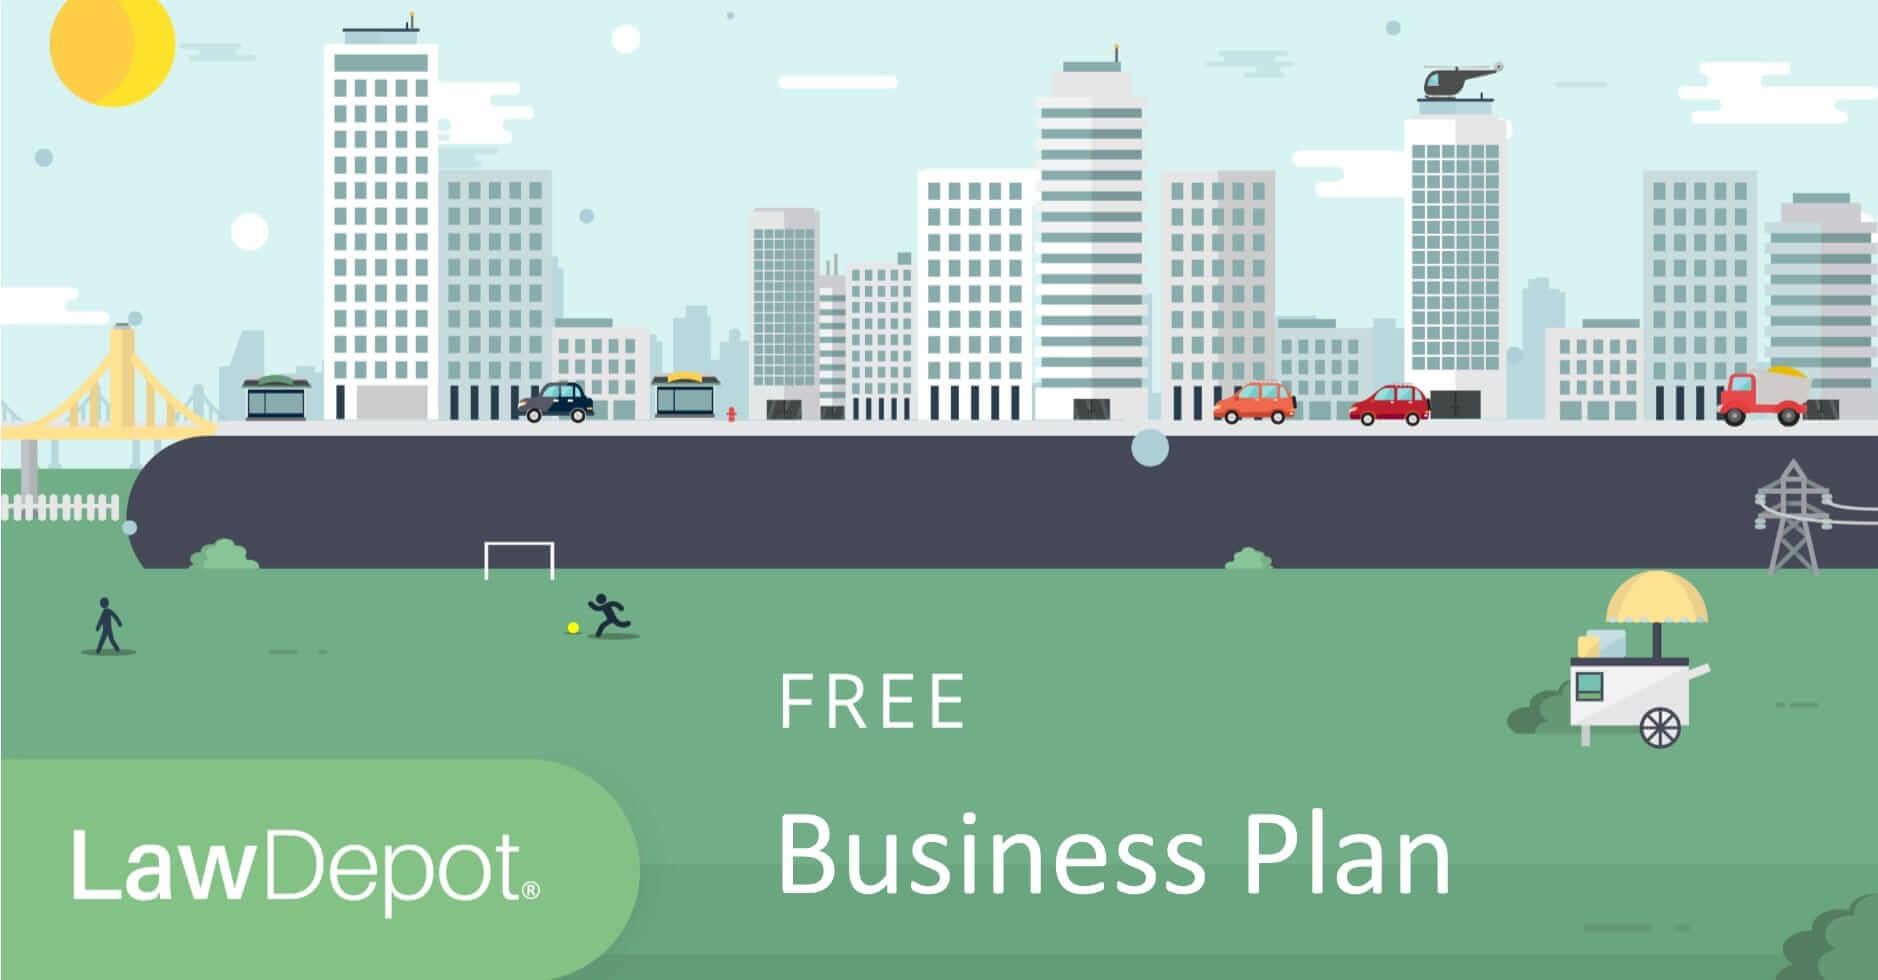 lawdepot's online business plan template